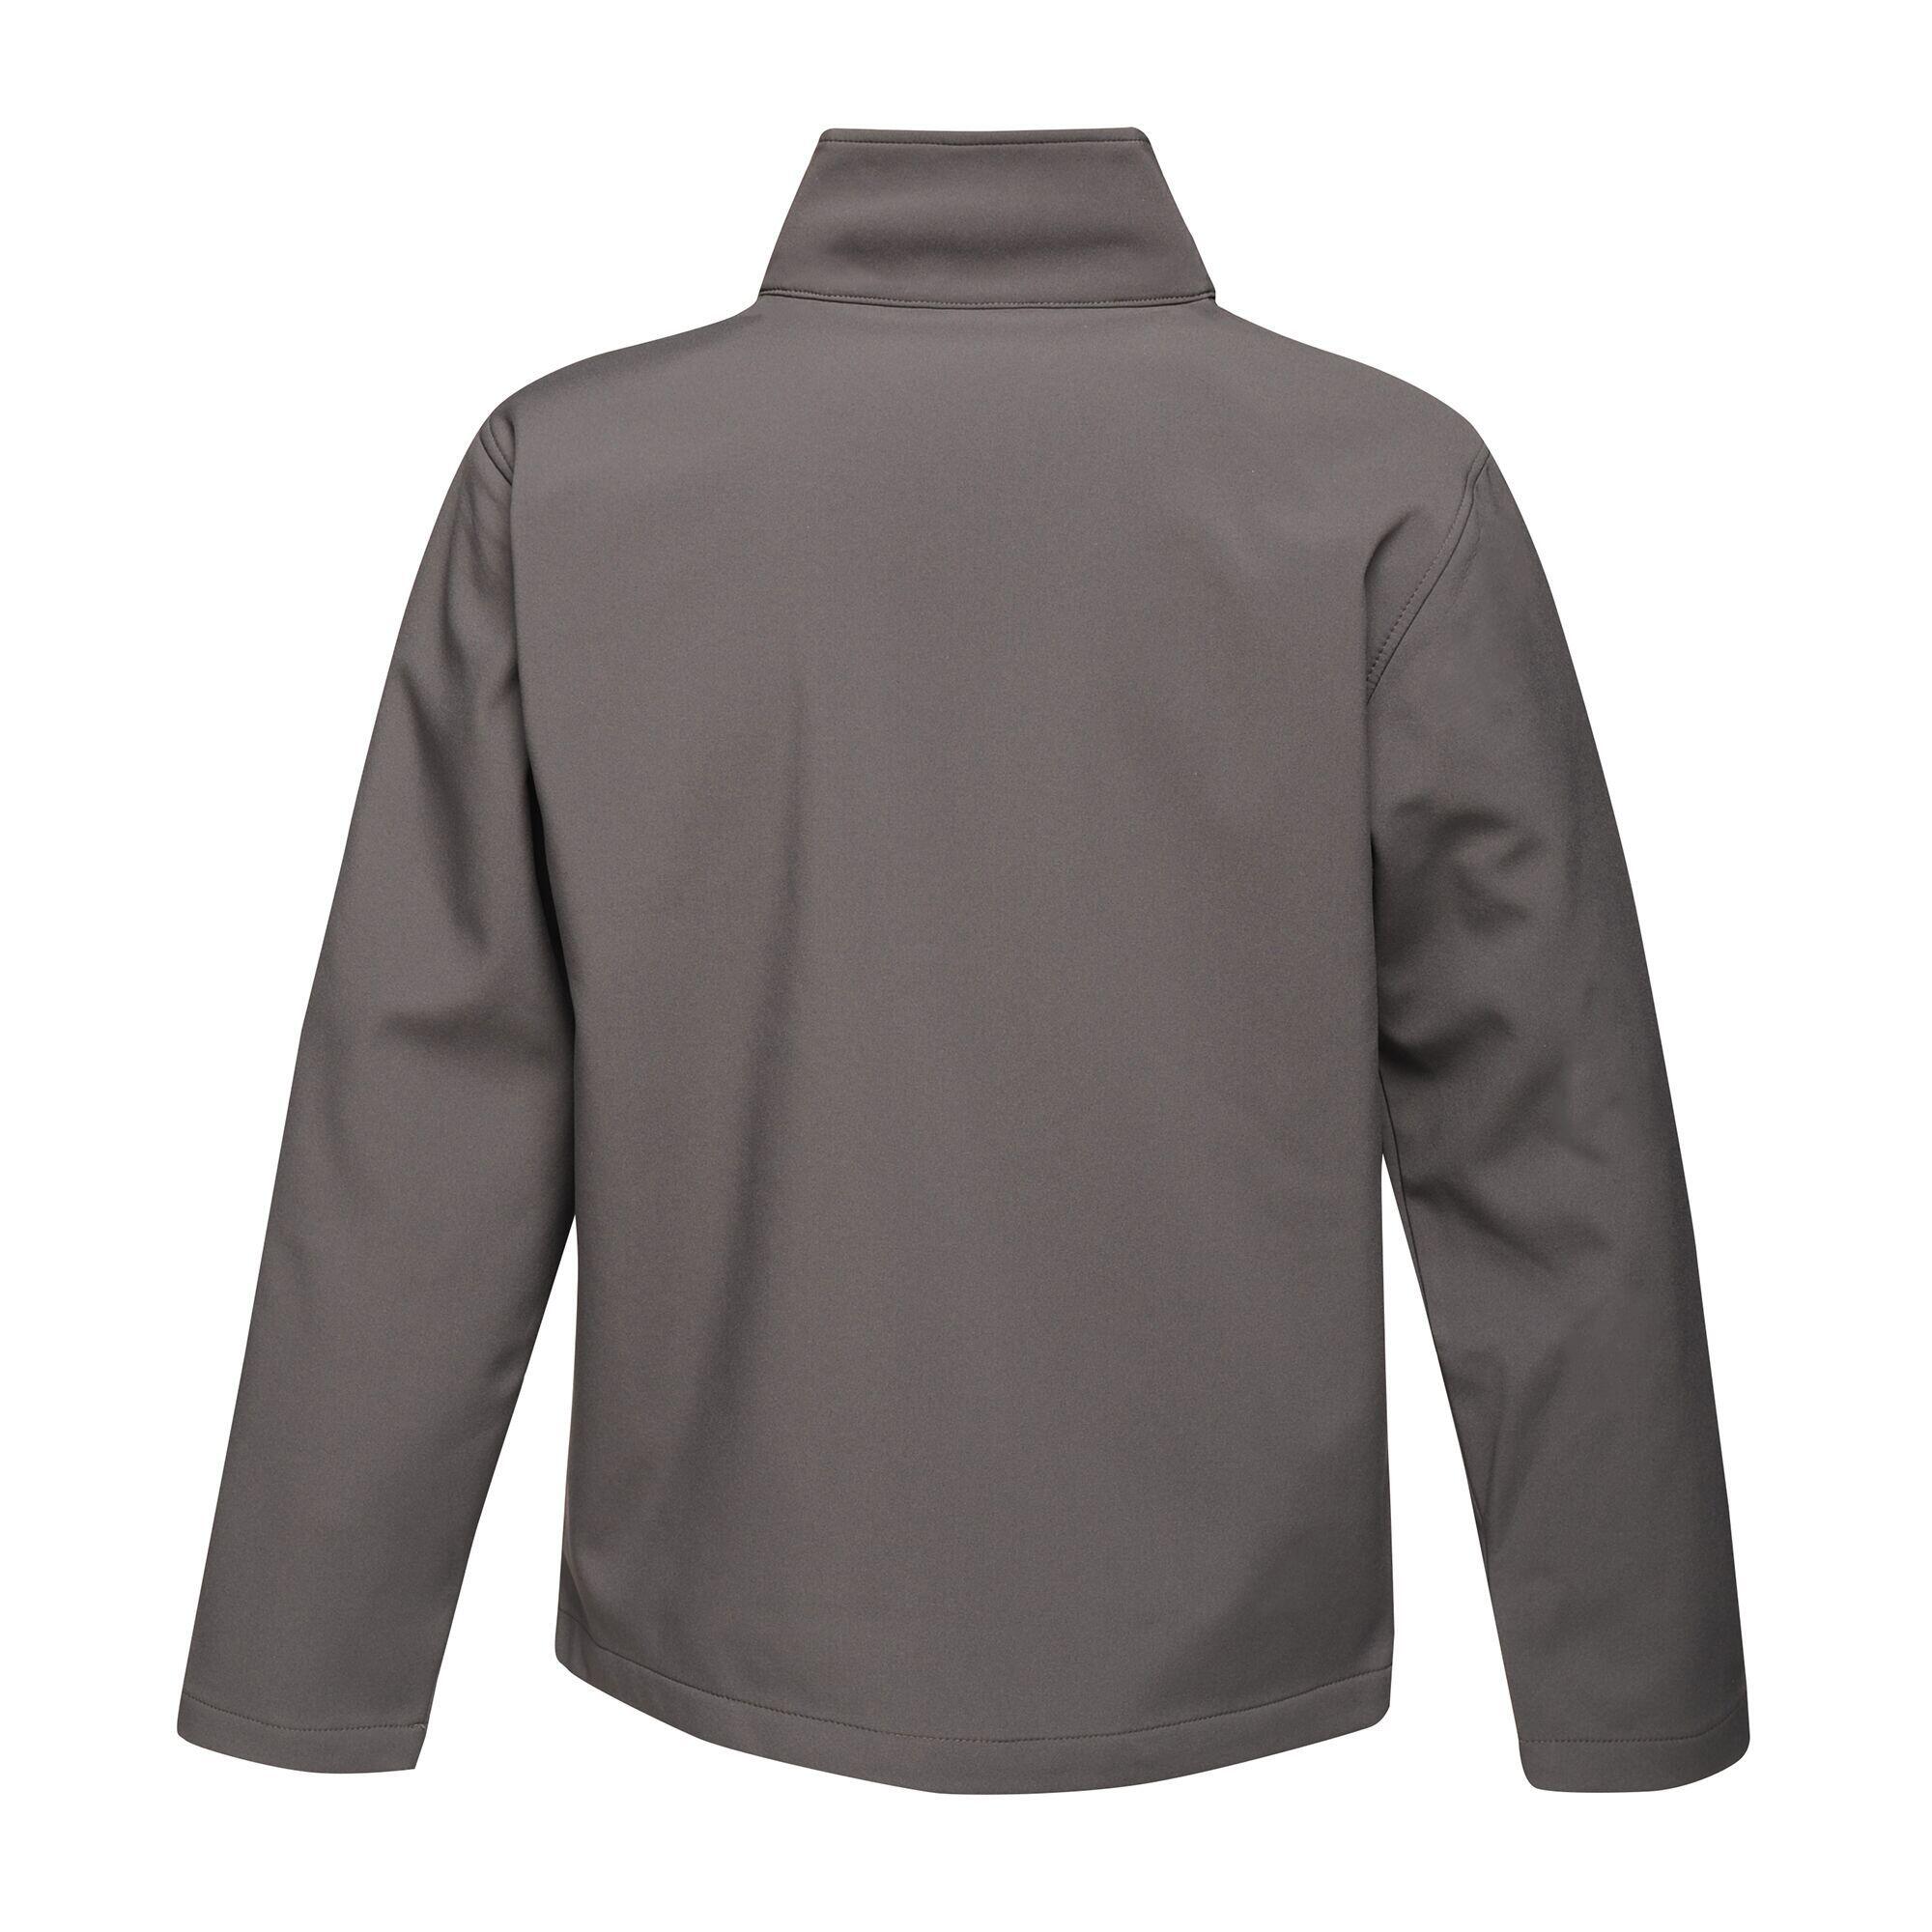 Standout Mens Ablaze Printable Soft Shell Jacket (Seal Grey/Black) 2/5